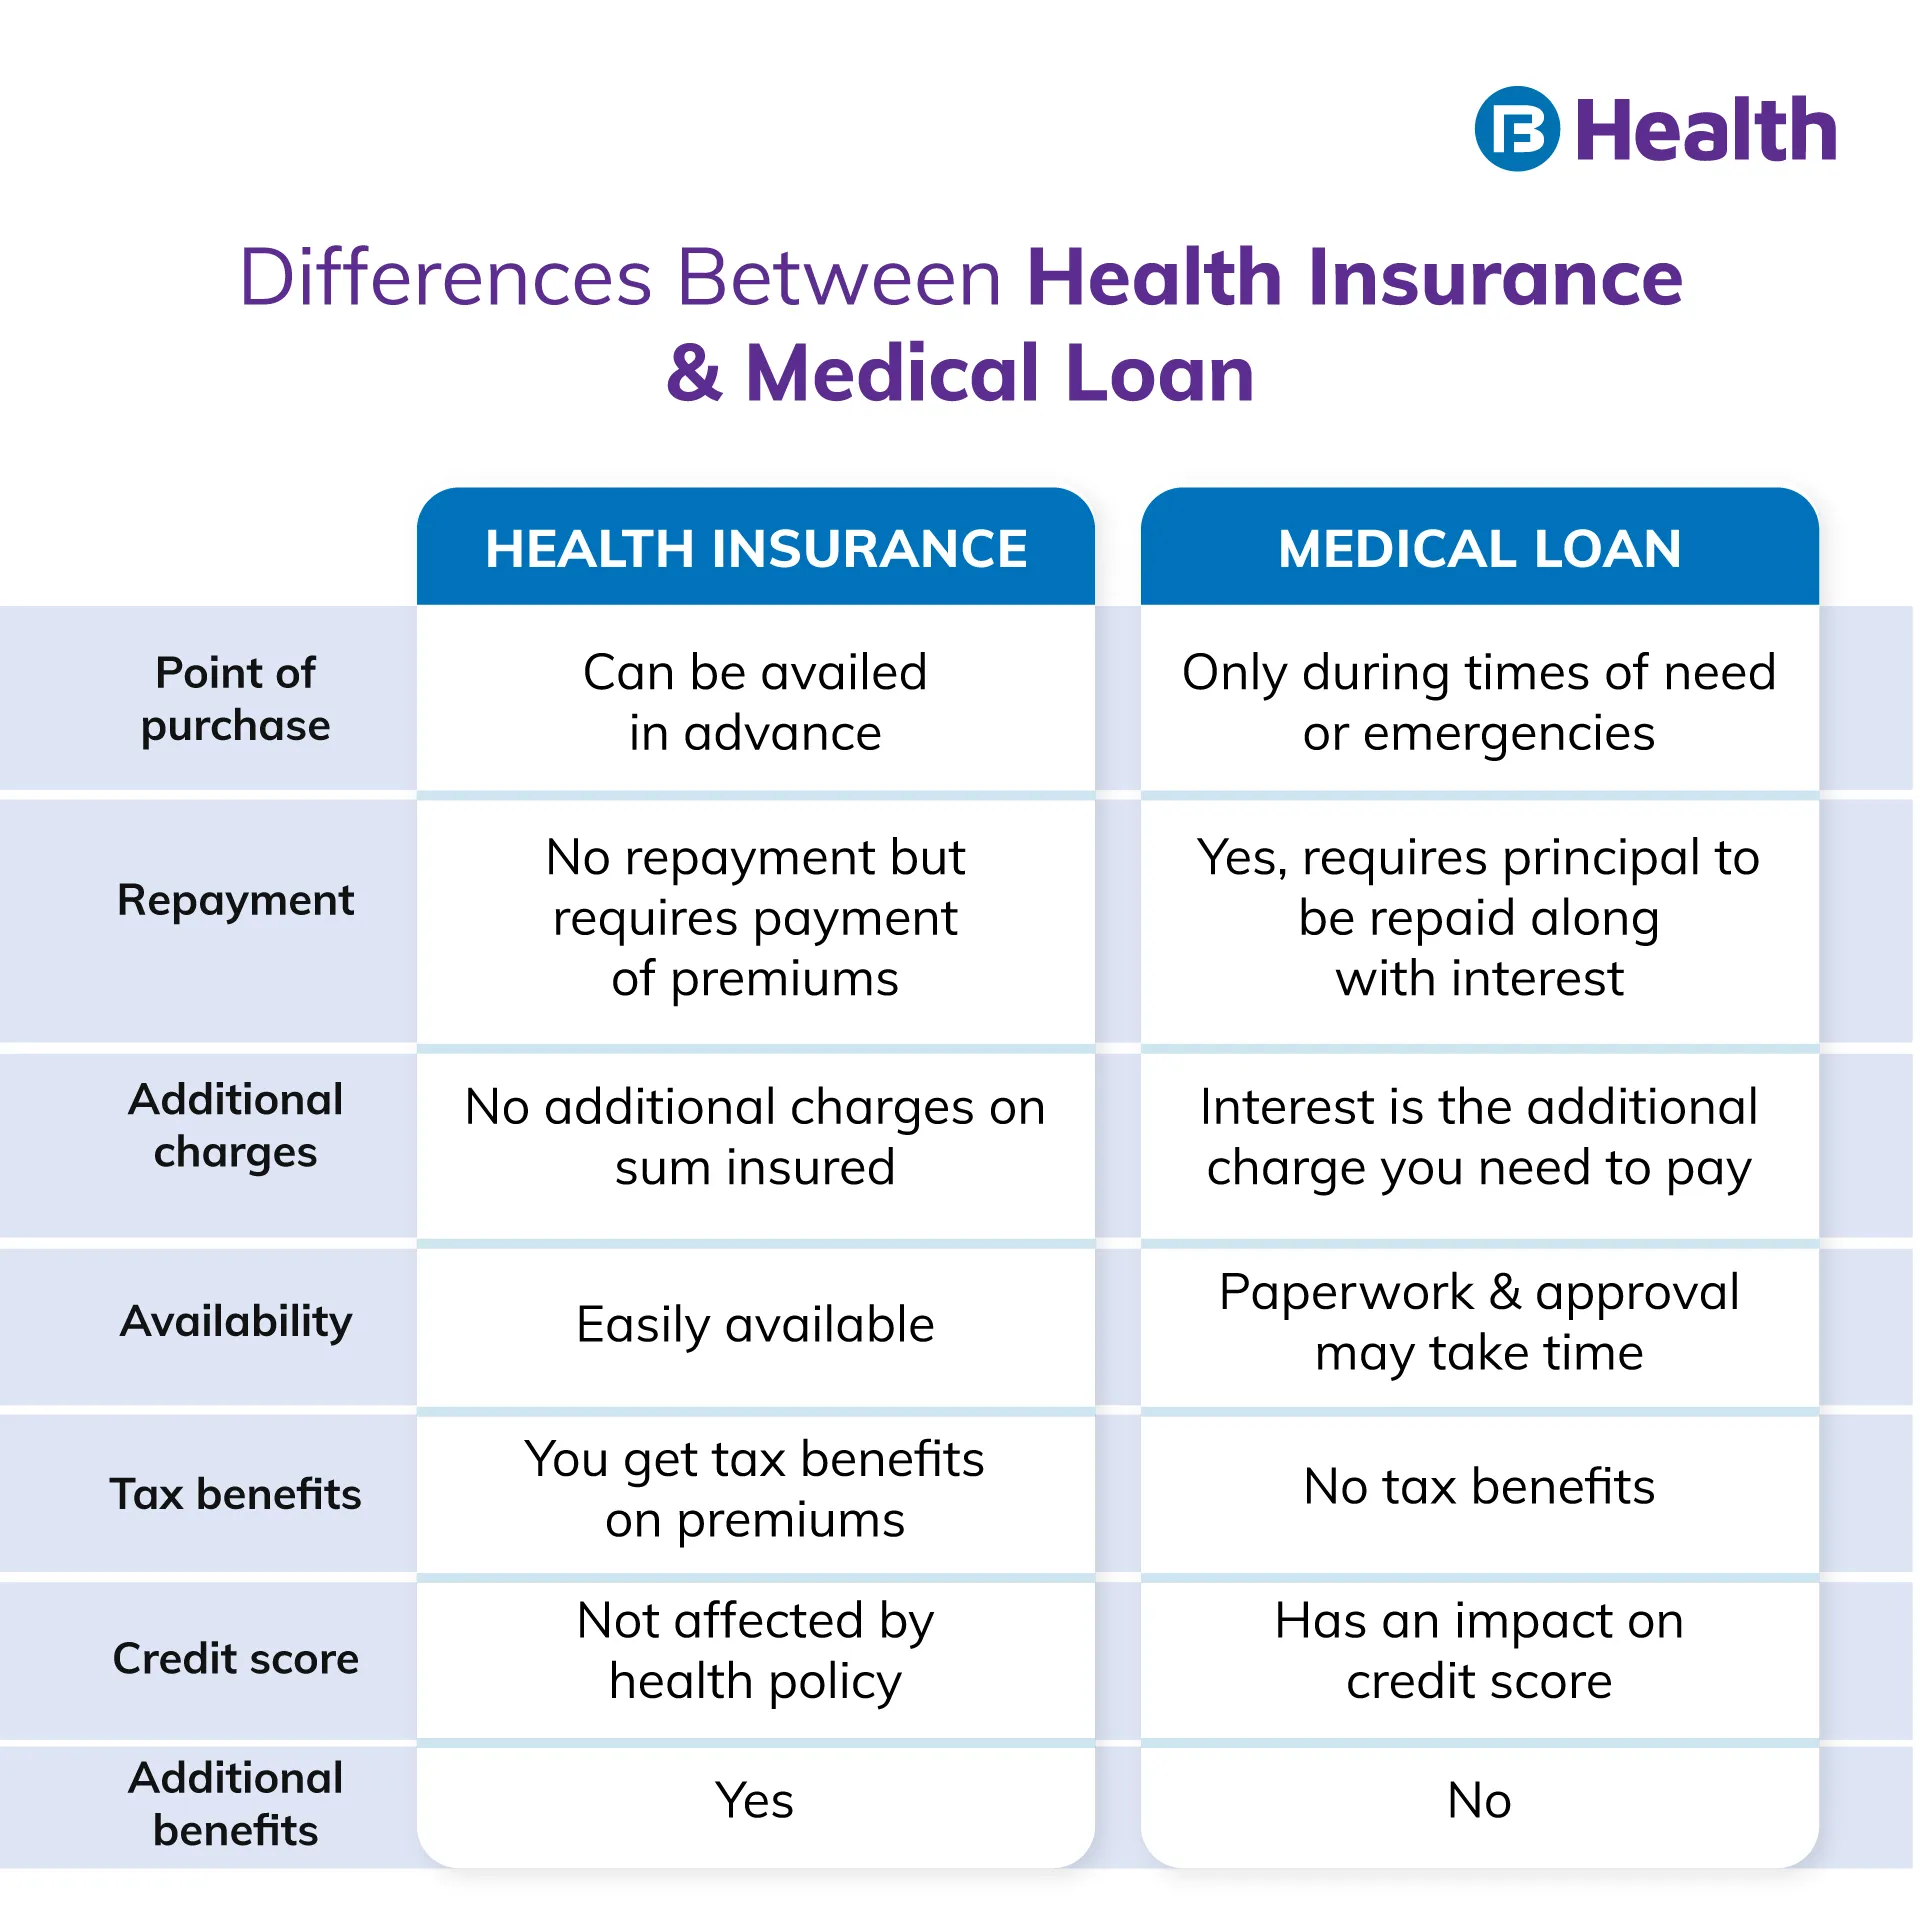 Health insurance vs. Medical loan